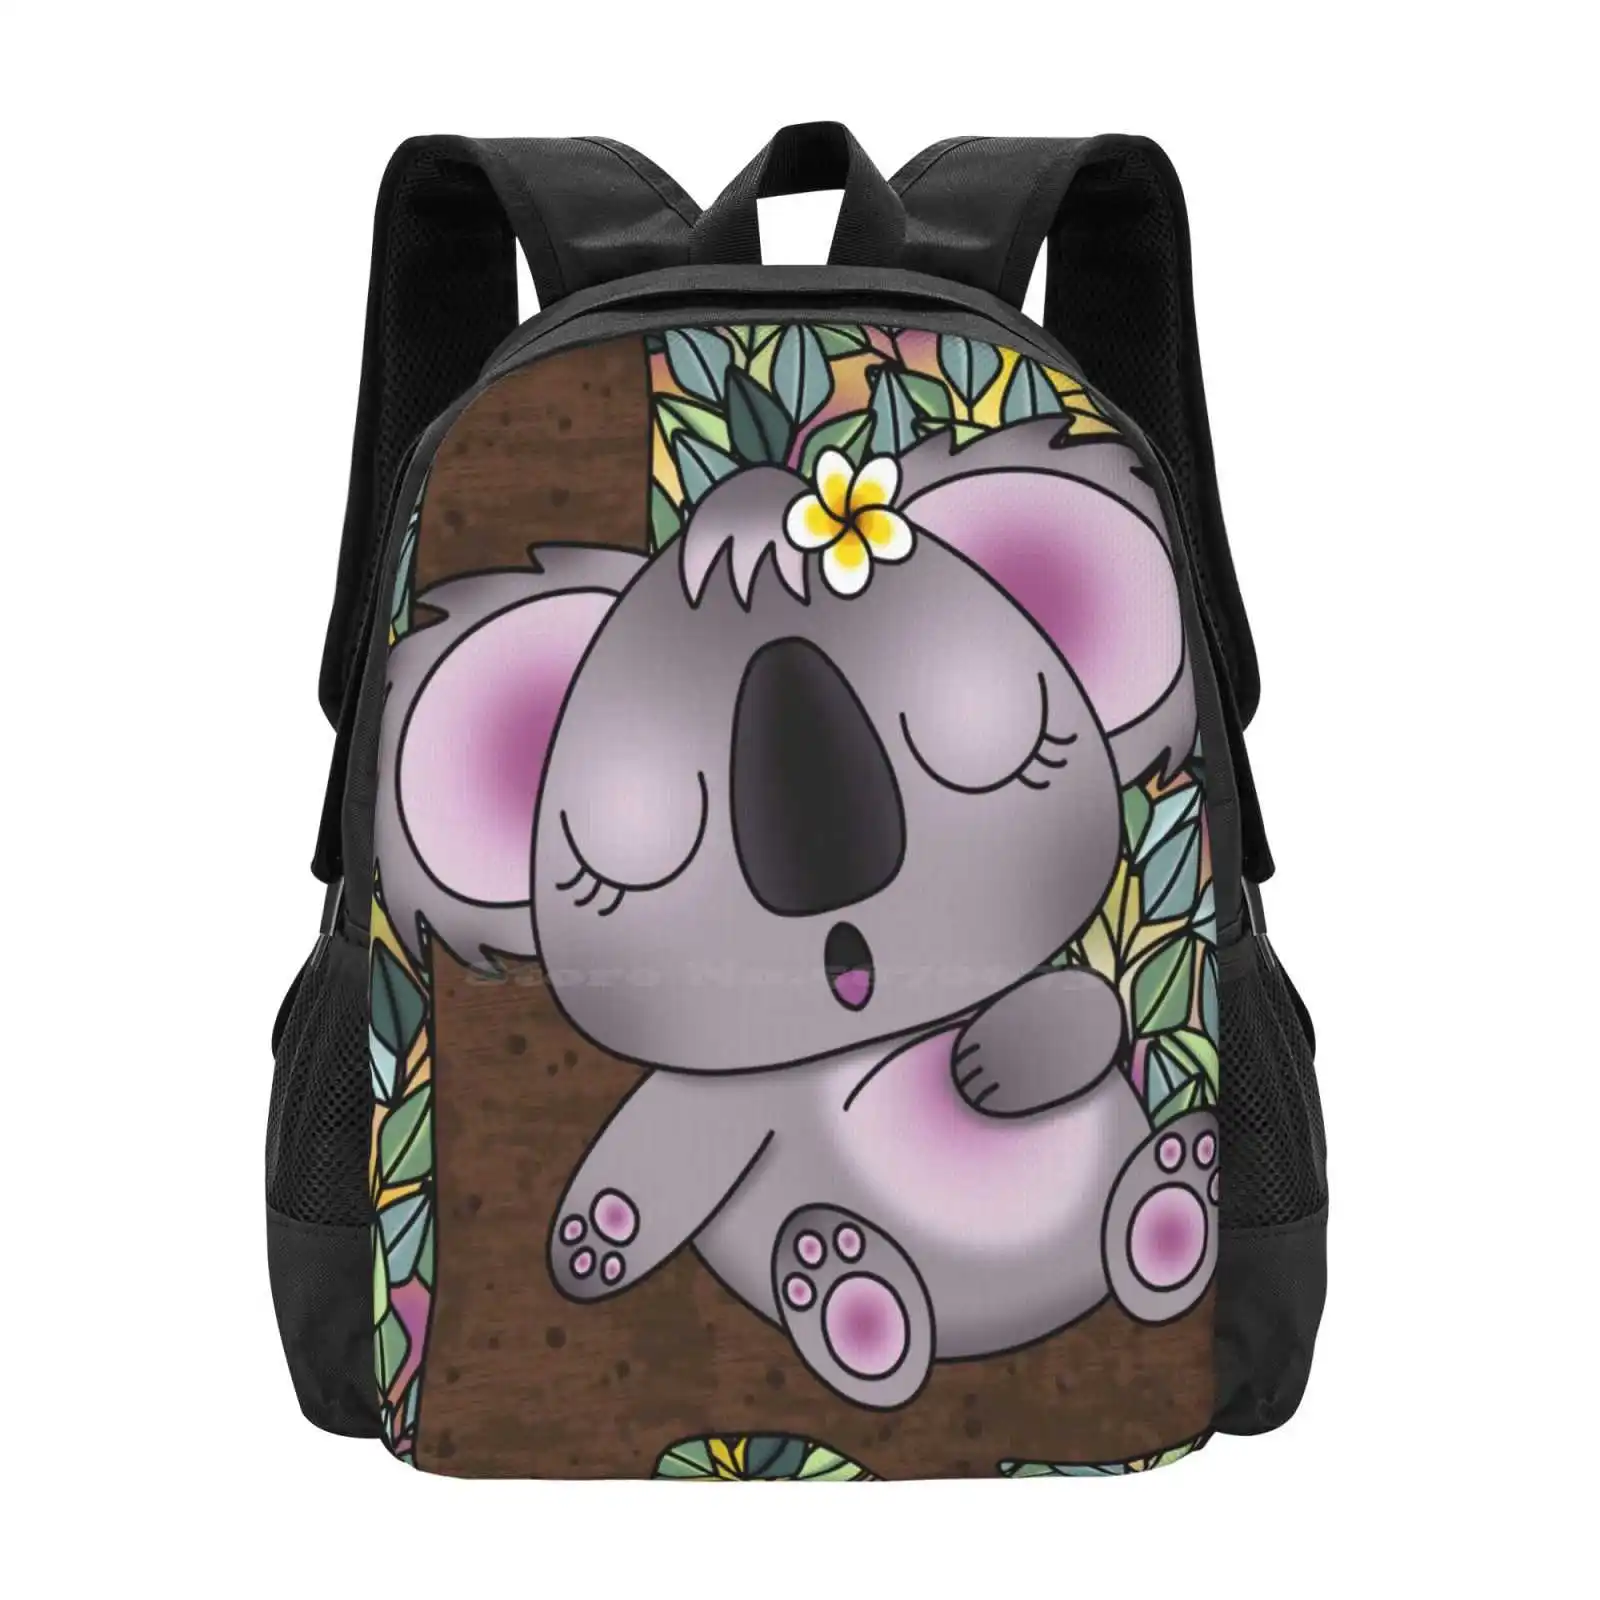 Lola The Koala Hot Sale Backpack Fashion Bags Yogifolies Wild